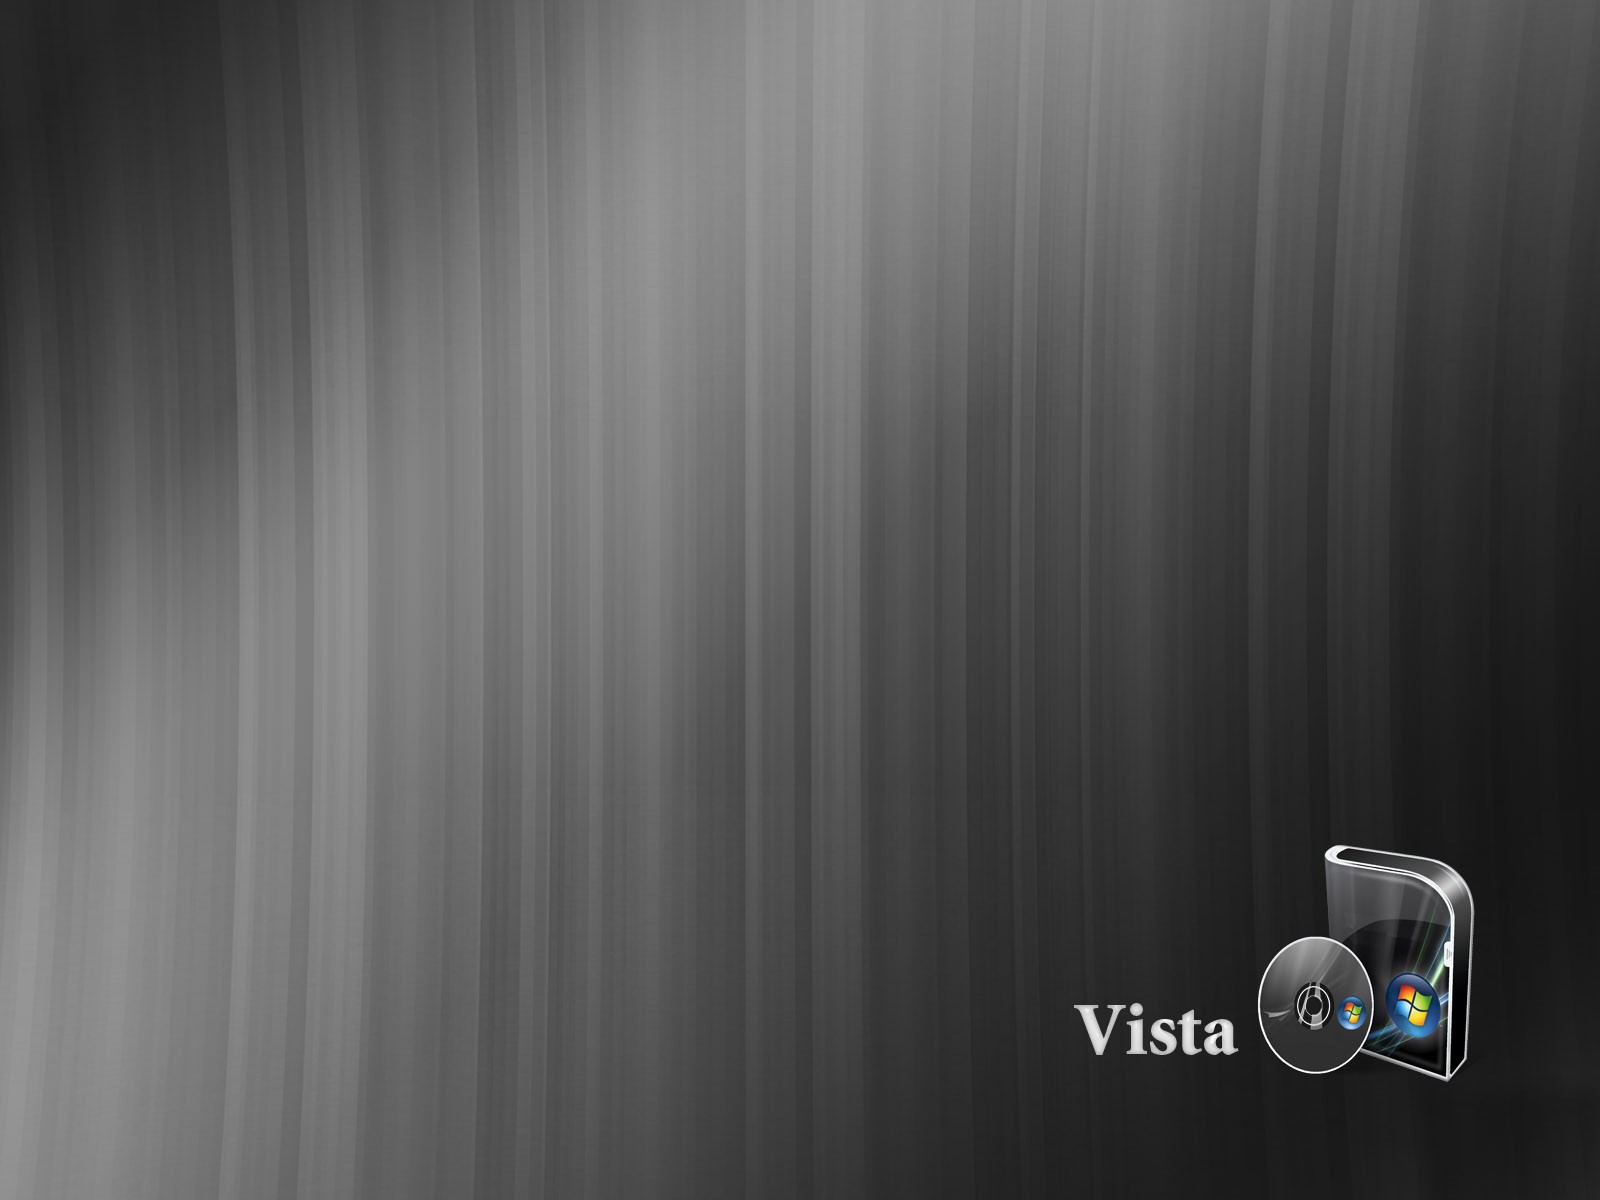  Vistaの壁紙アルバム #16 - 1600x1200